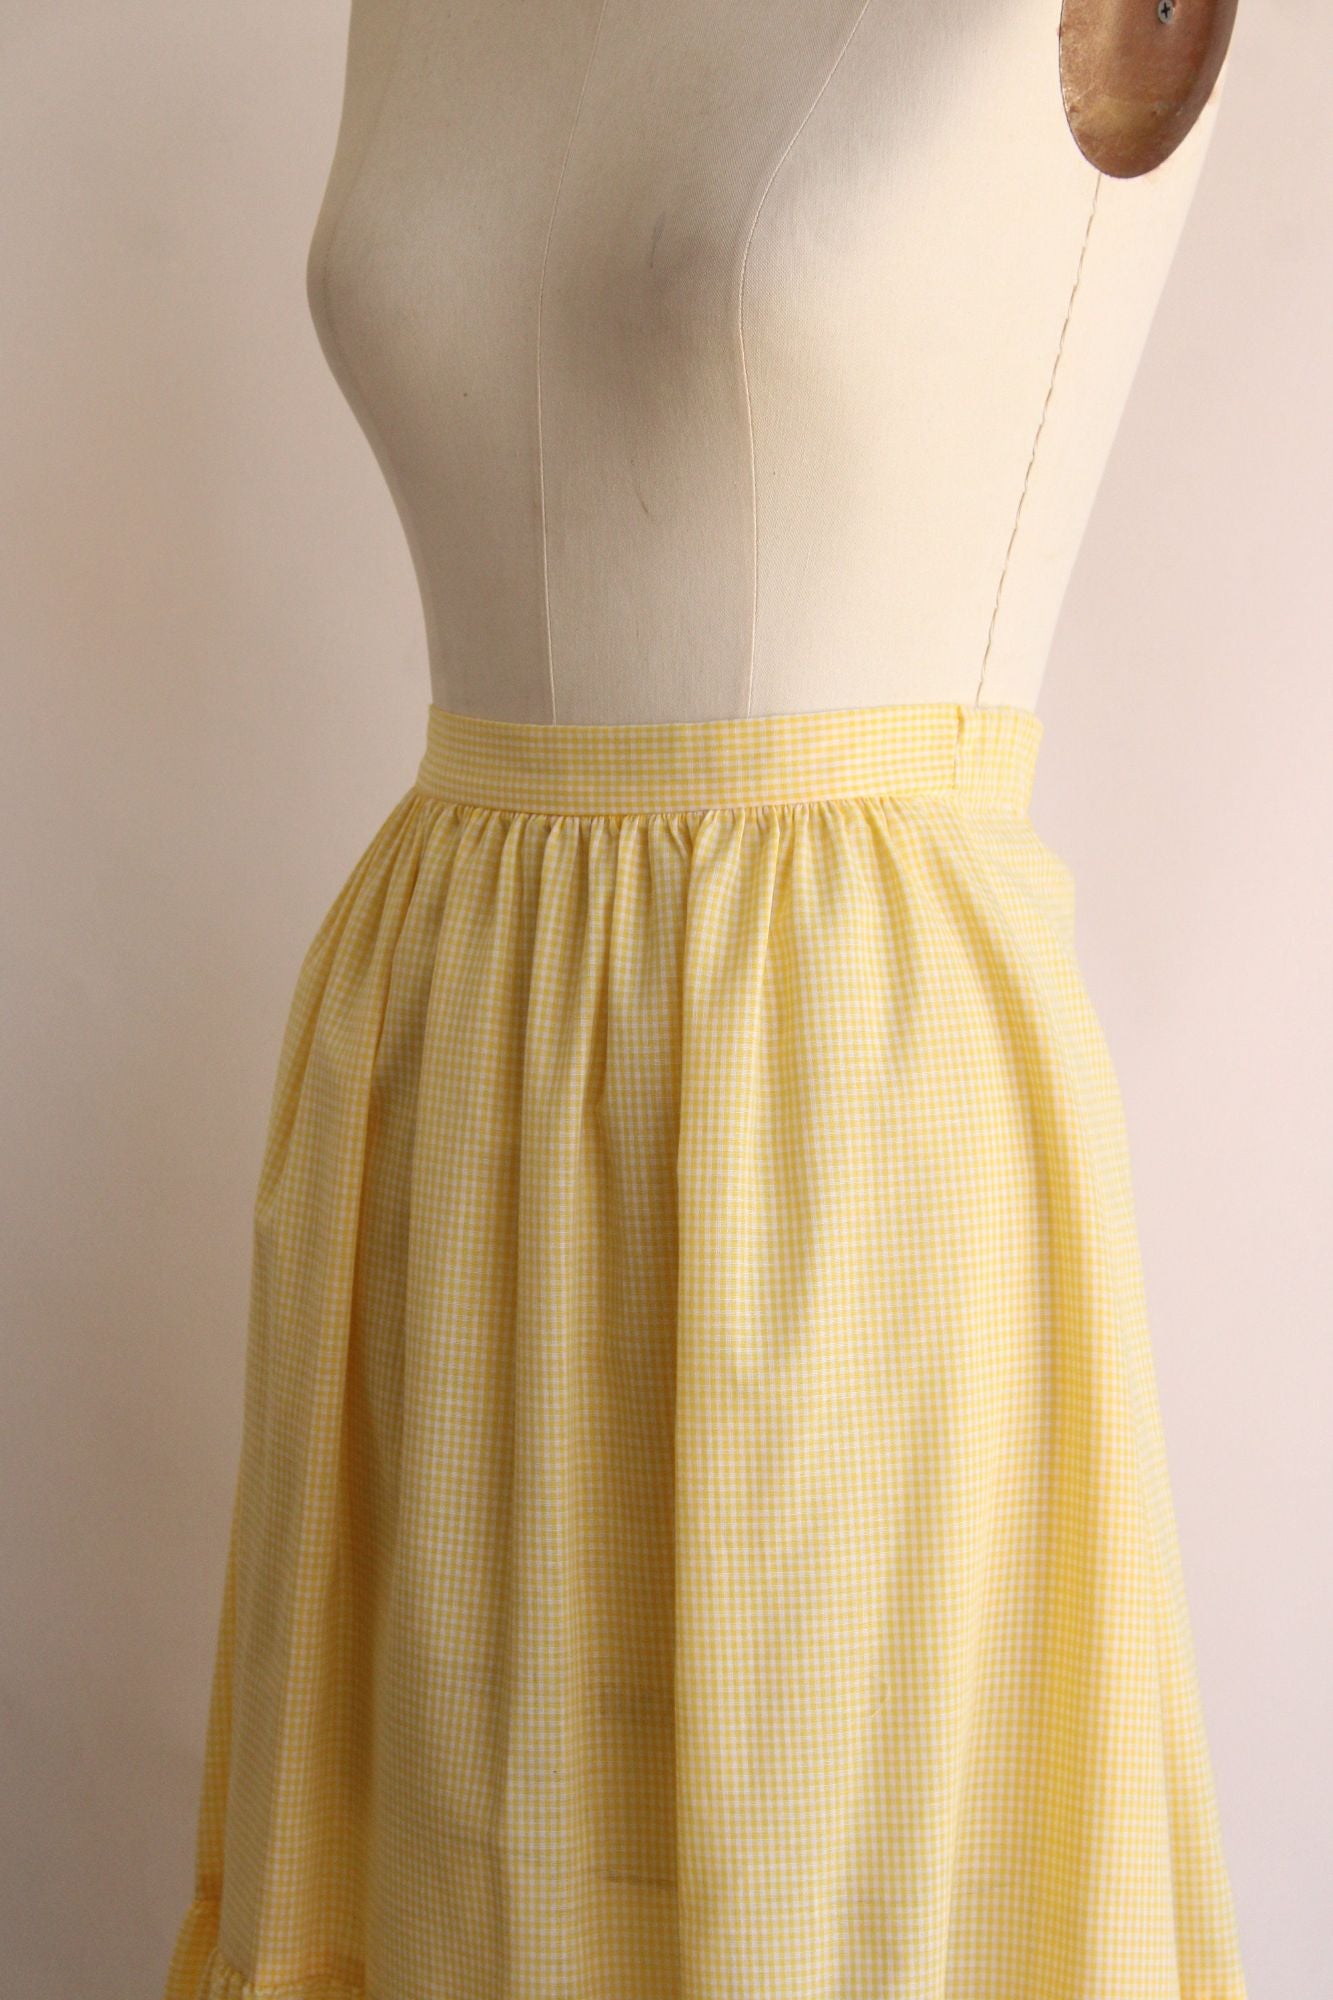 Vintage 1980s 1990s Yellow Gingham Skirt with Ruffle Hem